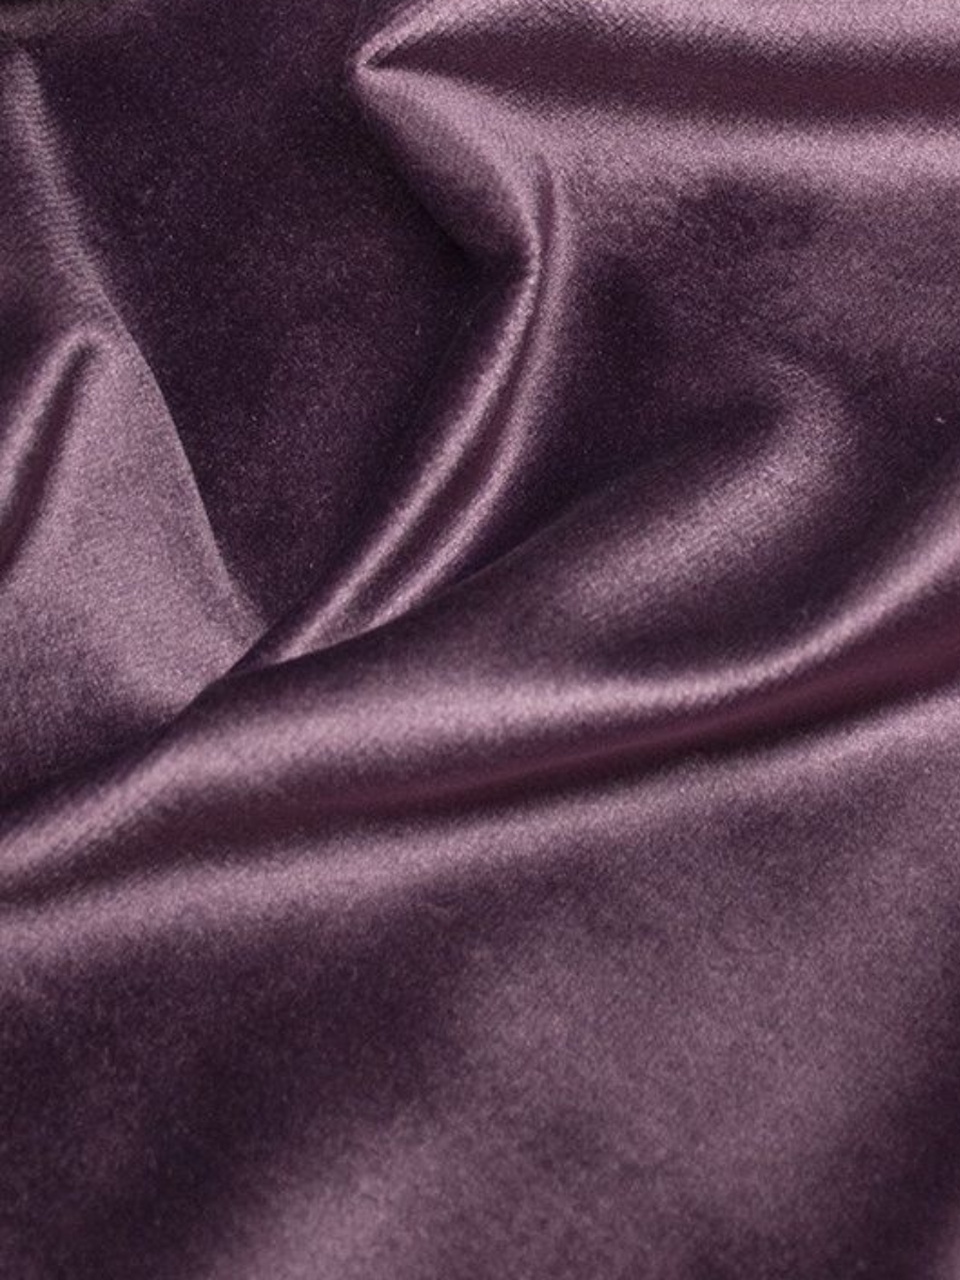 Портьеры Бархат пурпурный - 590 ₽, заказать онлайн.